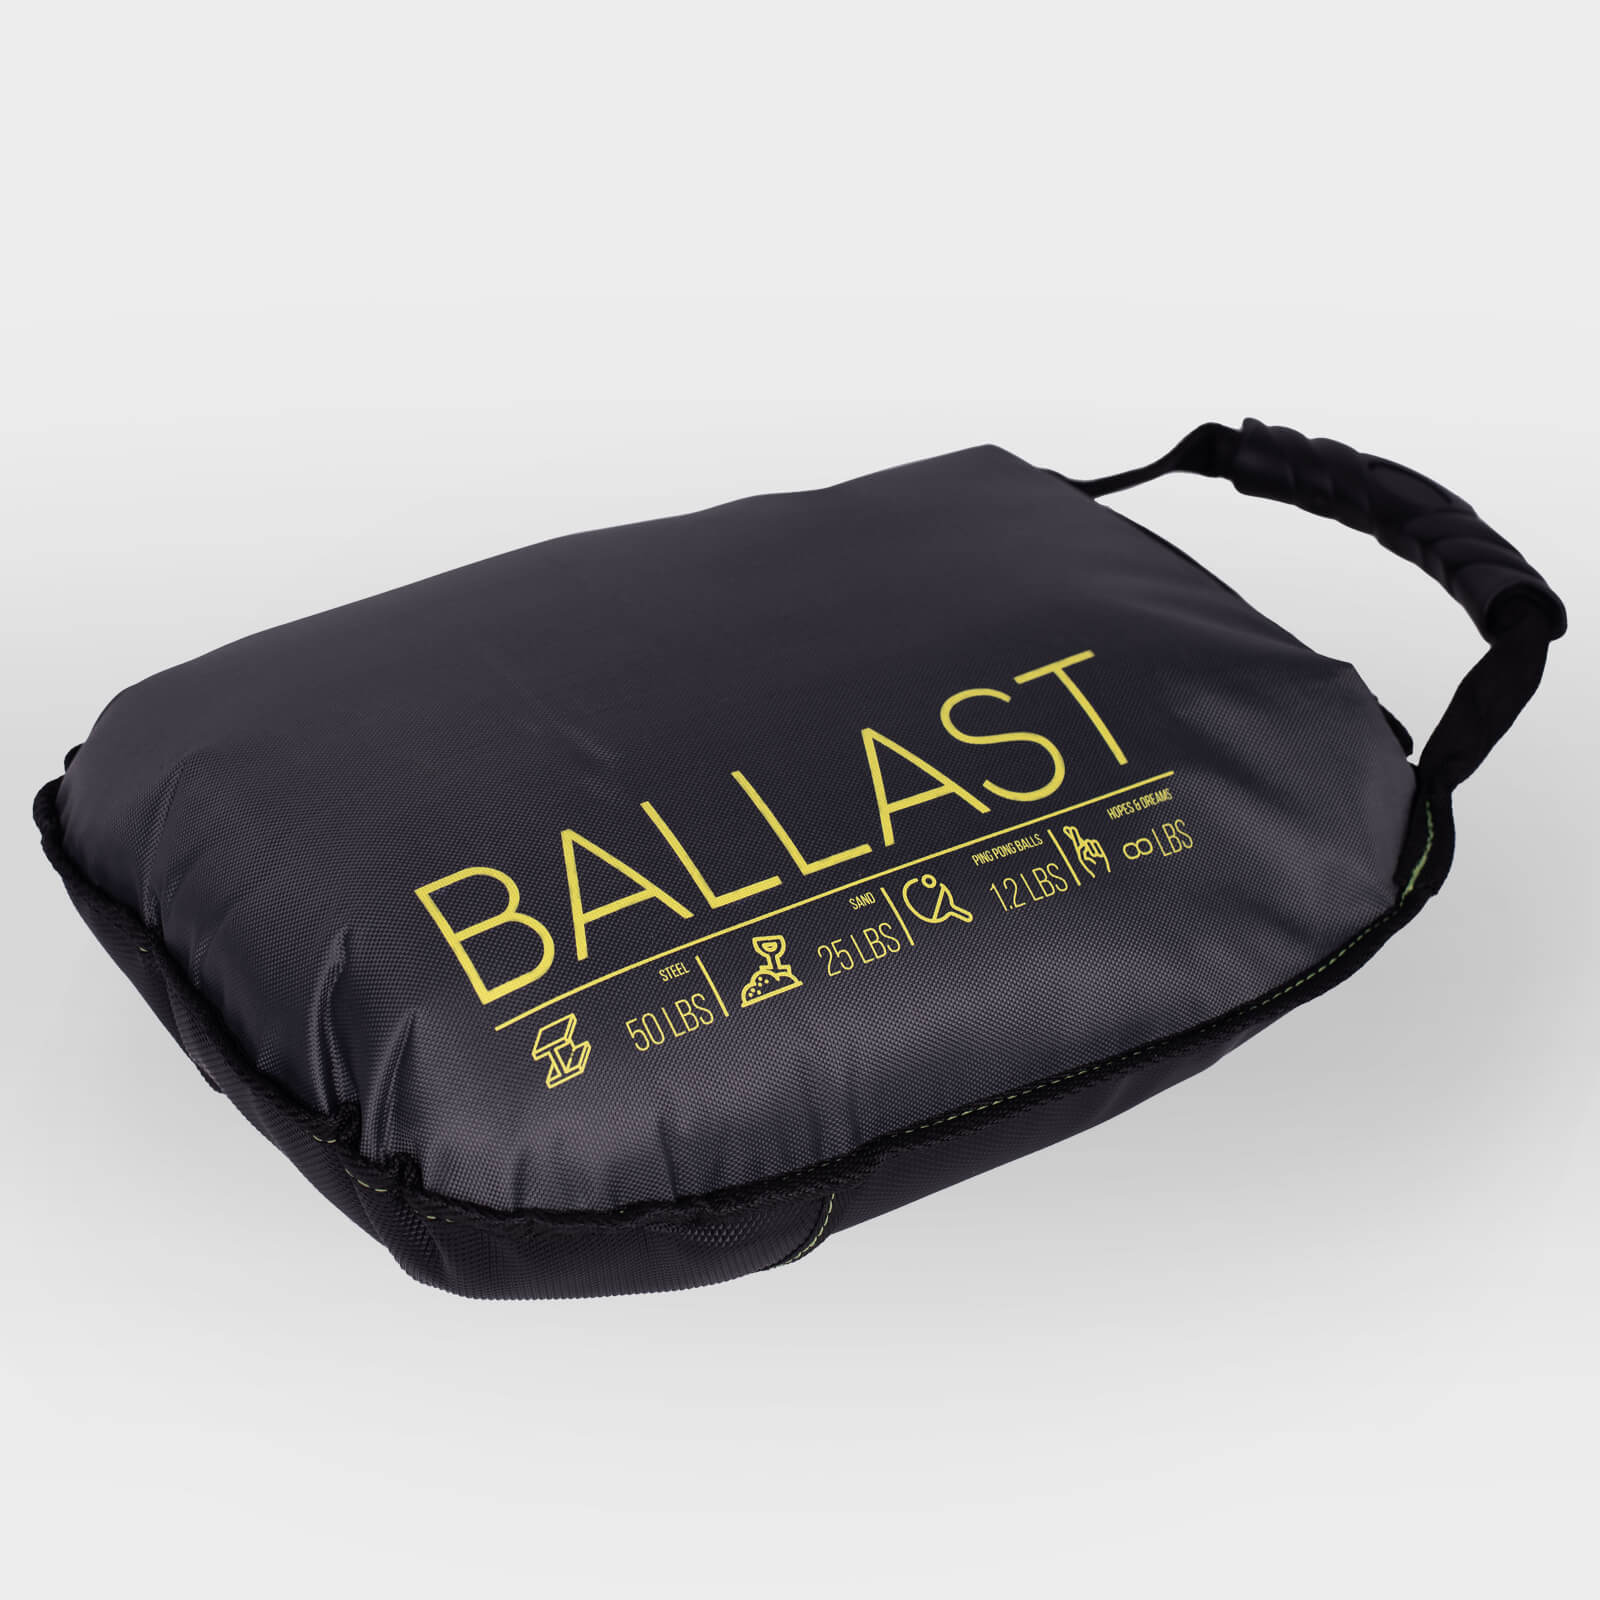 atlas ballast bag on floor